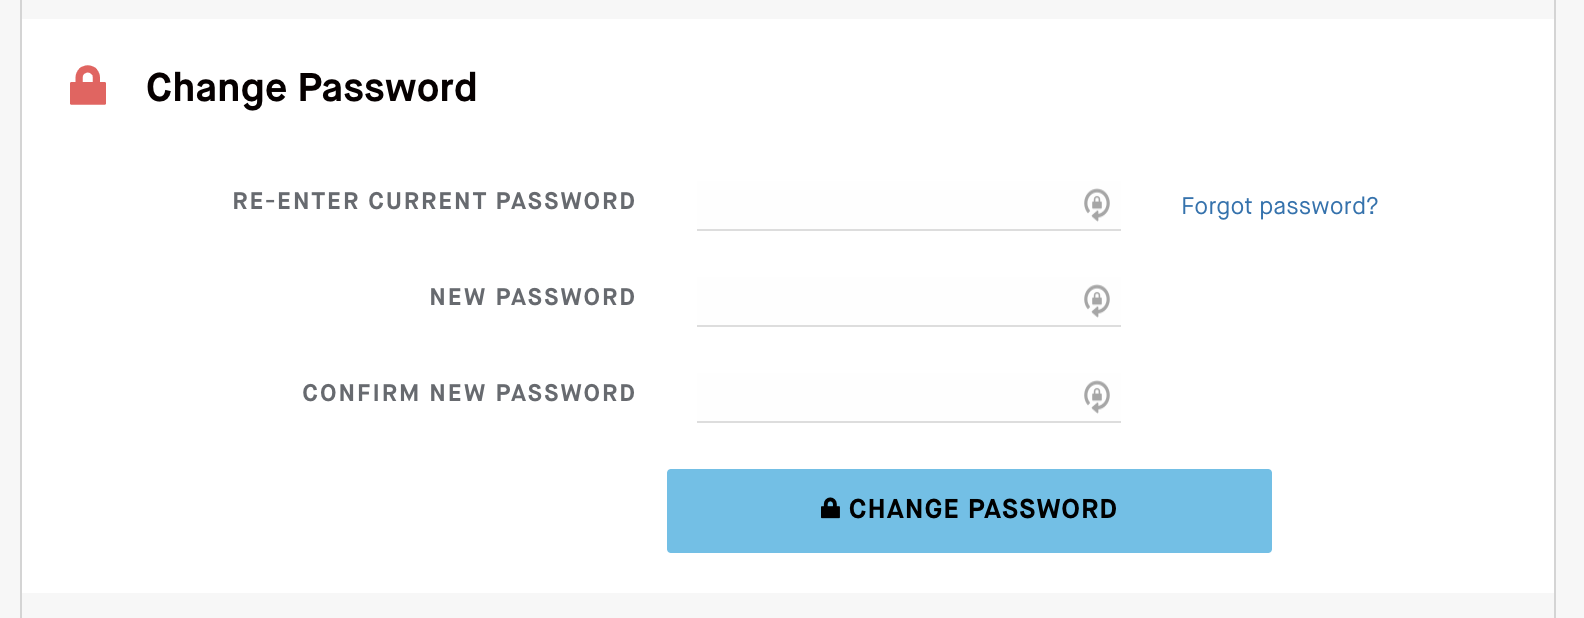 Change_Password.png